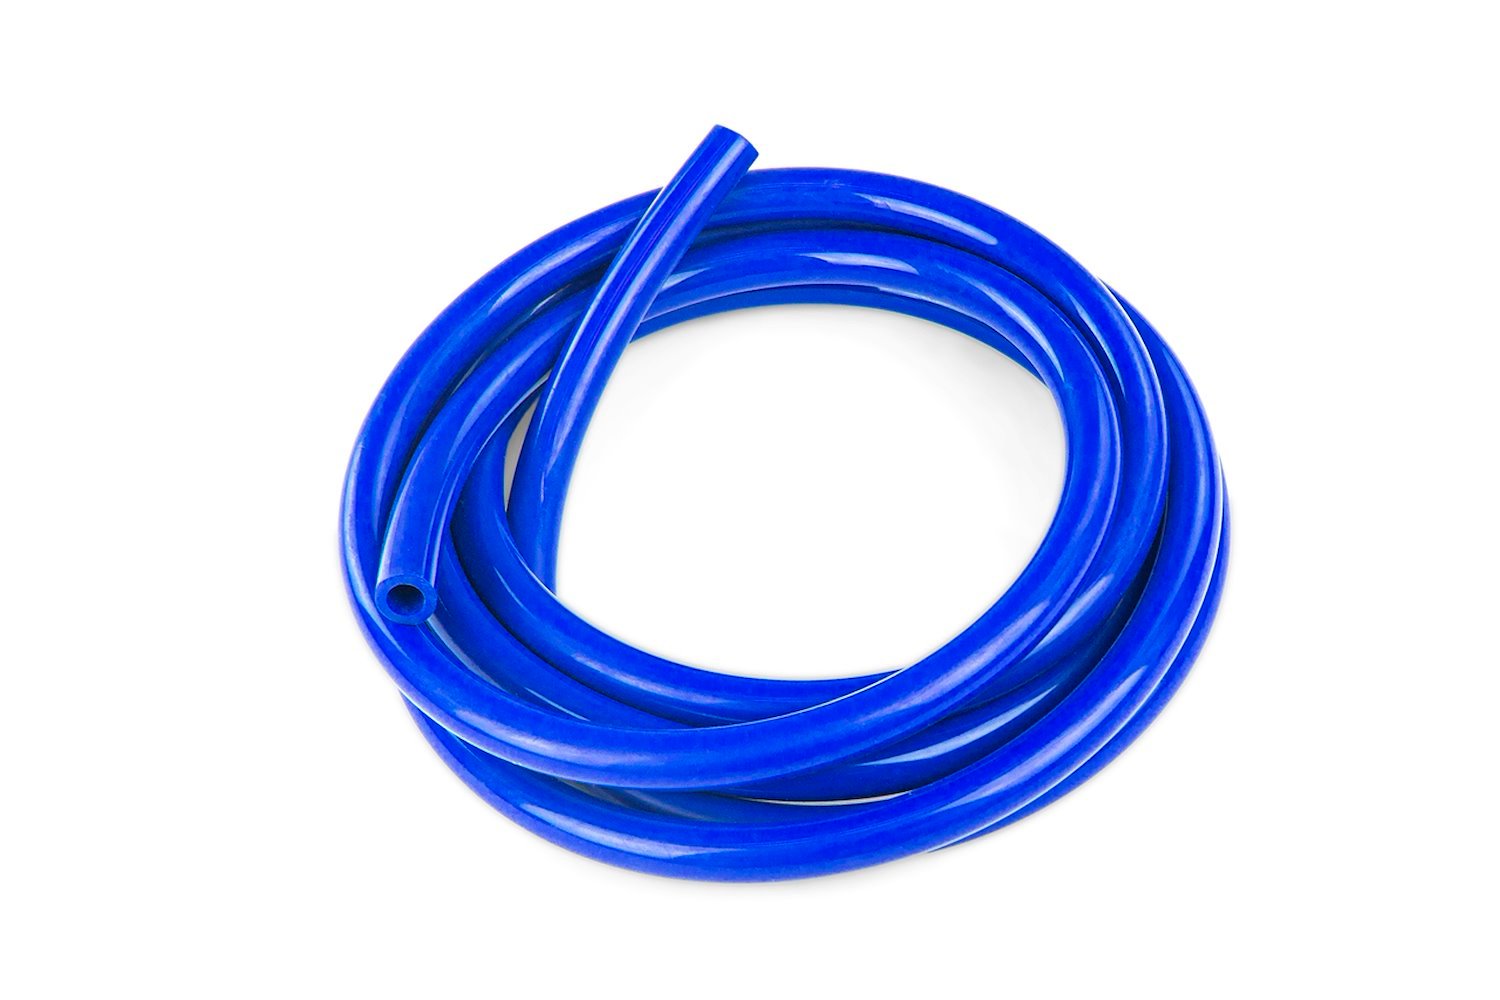 HTSVH6-BLUEx5 High-Temperature Silicone Vacuum Hose Tubing, 1/4 in. ID, 5 ft. Roll, Blue